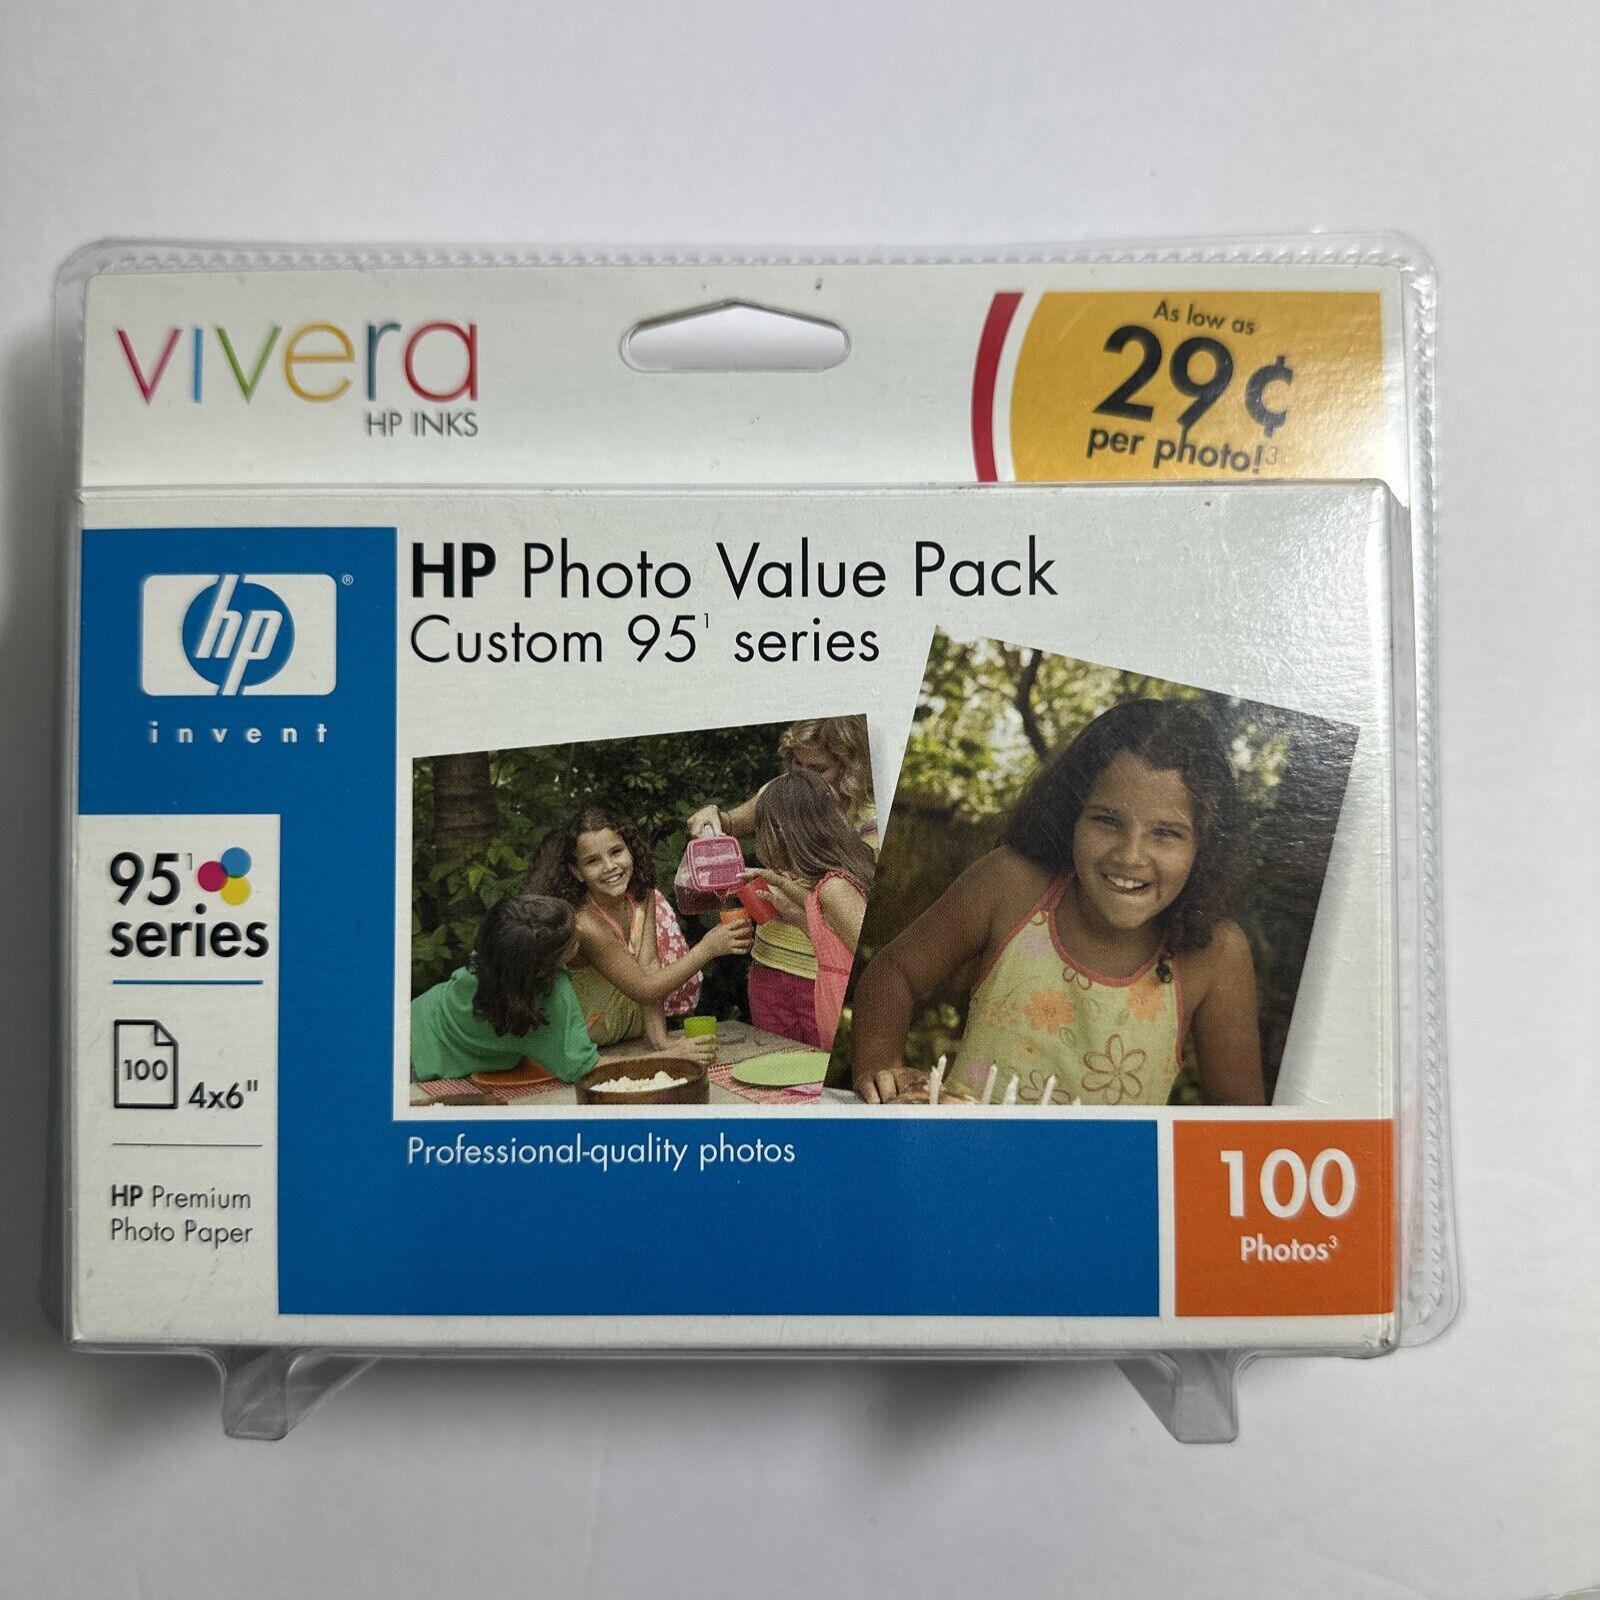 HP PHOTO VALUE PACK Custom 95 series Tri-color Ink cartridge, BRAND NEW Sealed